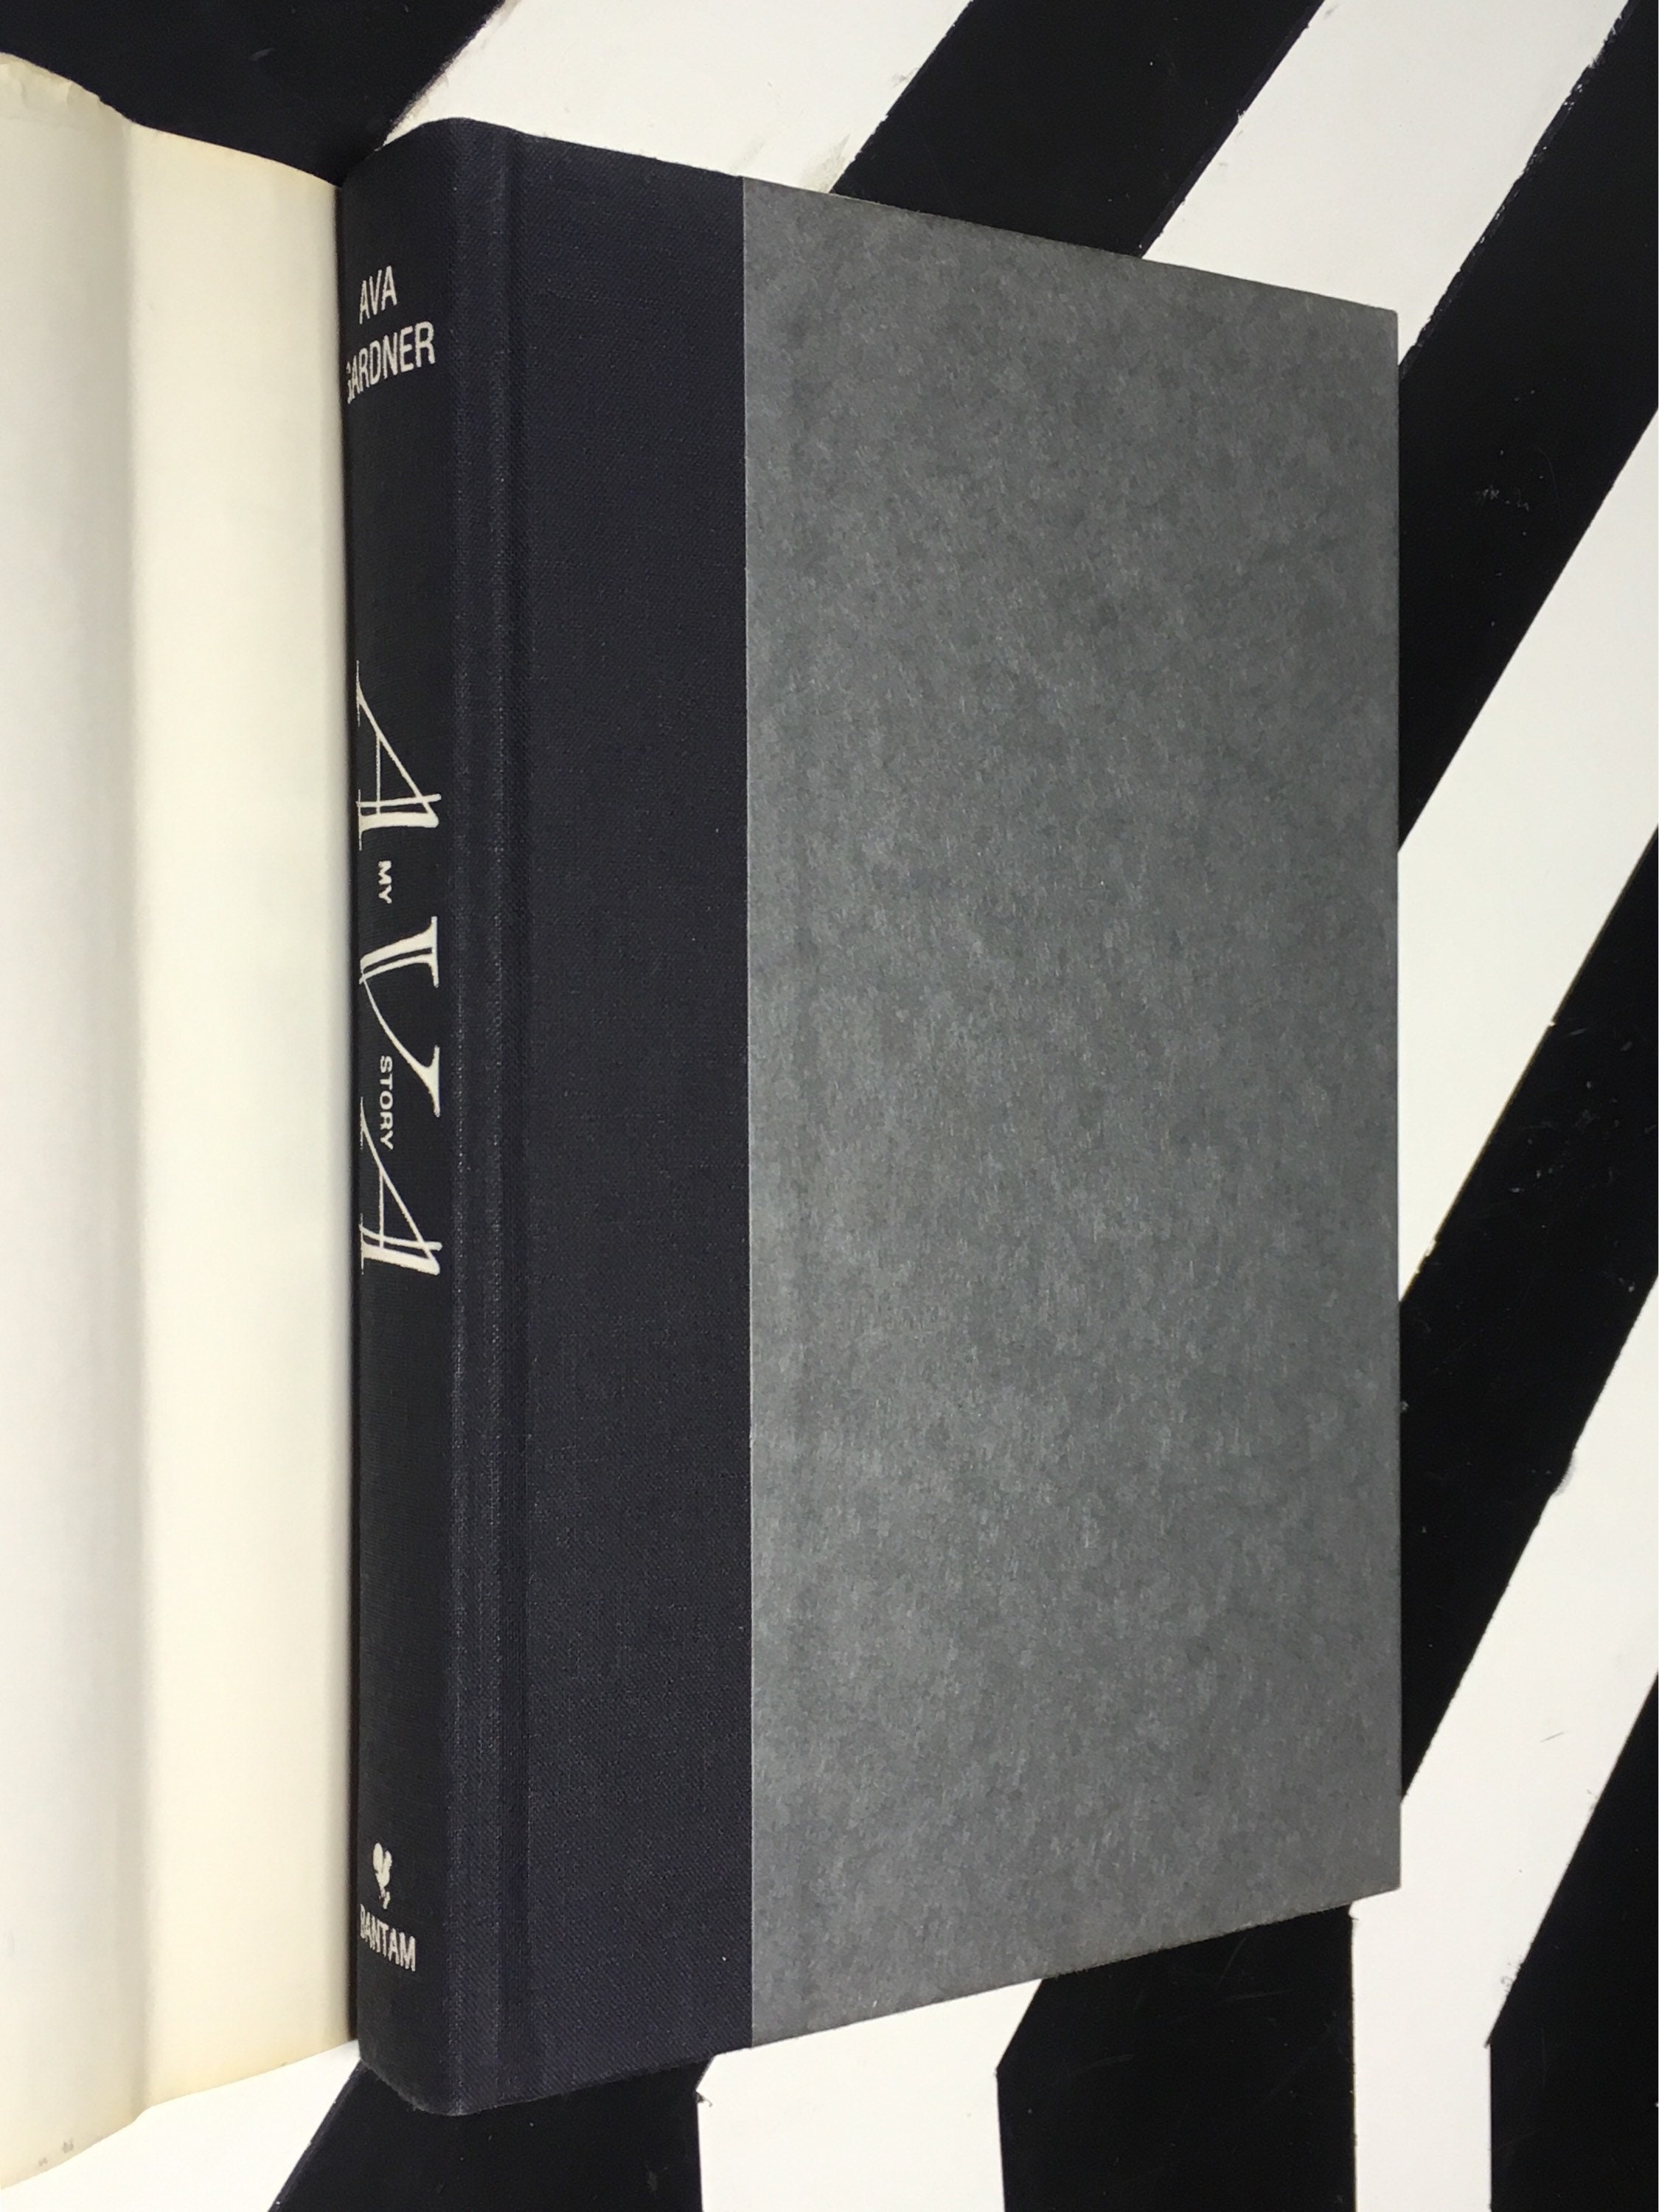 Ava: My Story by Ava Gardner (1990) hardcover book